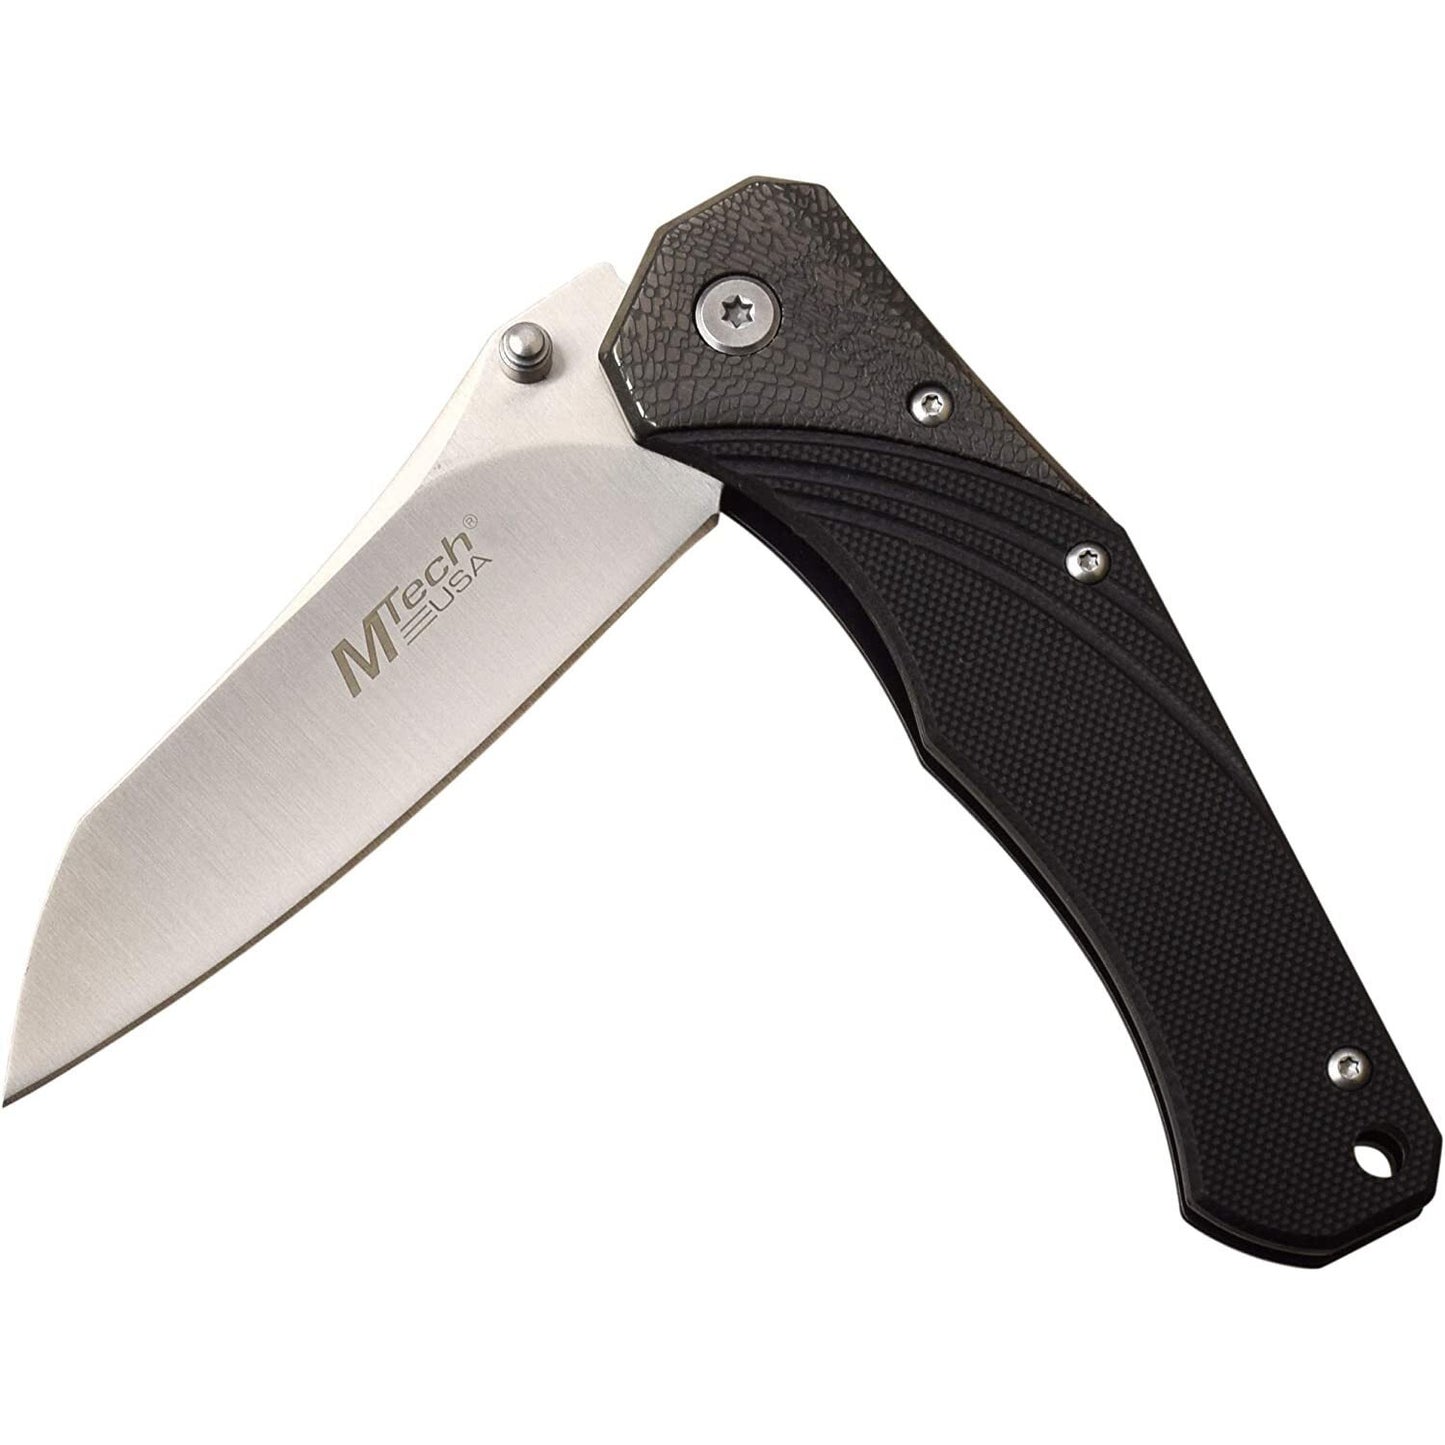 Mtech Mtech Sheepsfoot Fine Edge Blade Folding Pocket Knife - 4.5 Inches G10 Handle #mt-1103Gy Gray